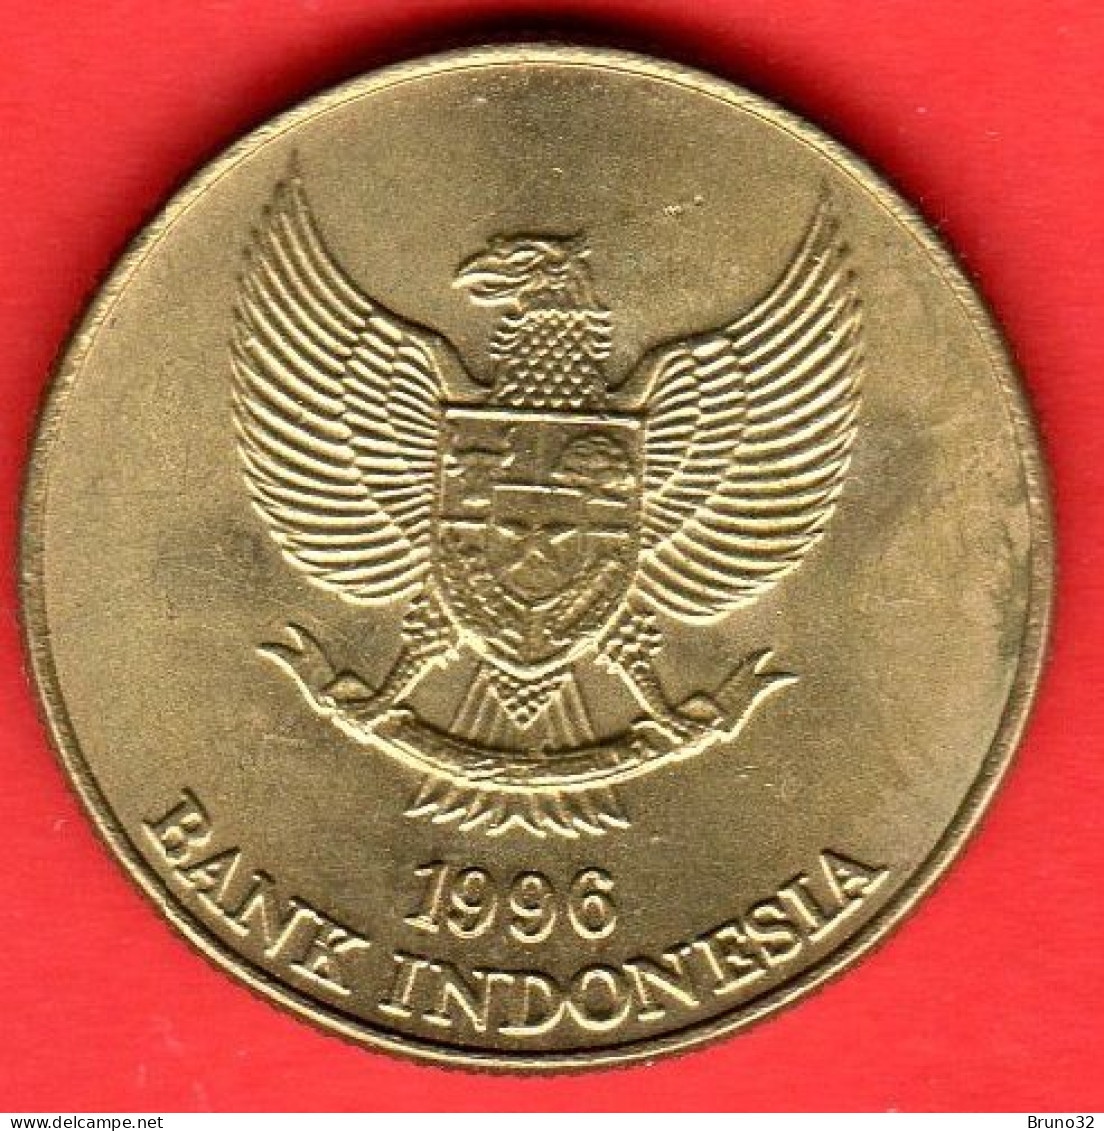 Indonesia - 1996 - 50 Rupiah - Dragon - QFDC/aUNC - Come Da Foto - Indonesien